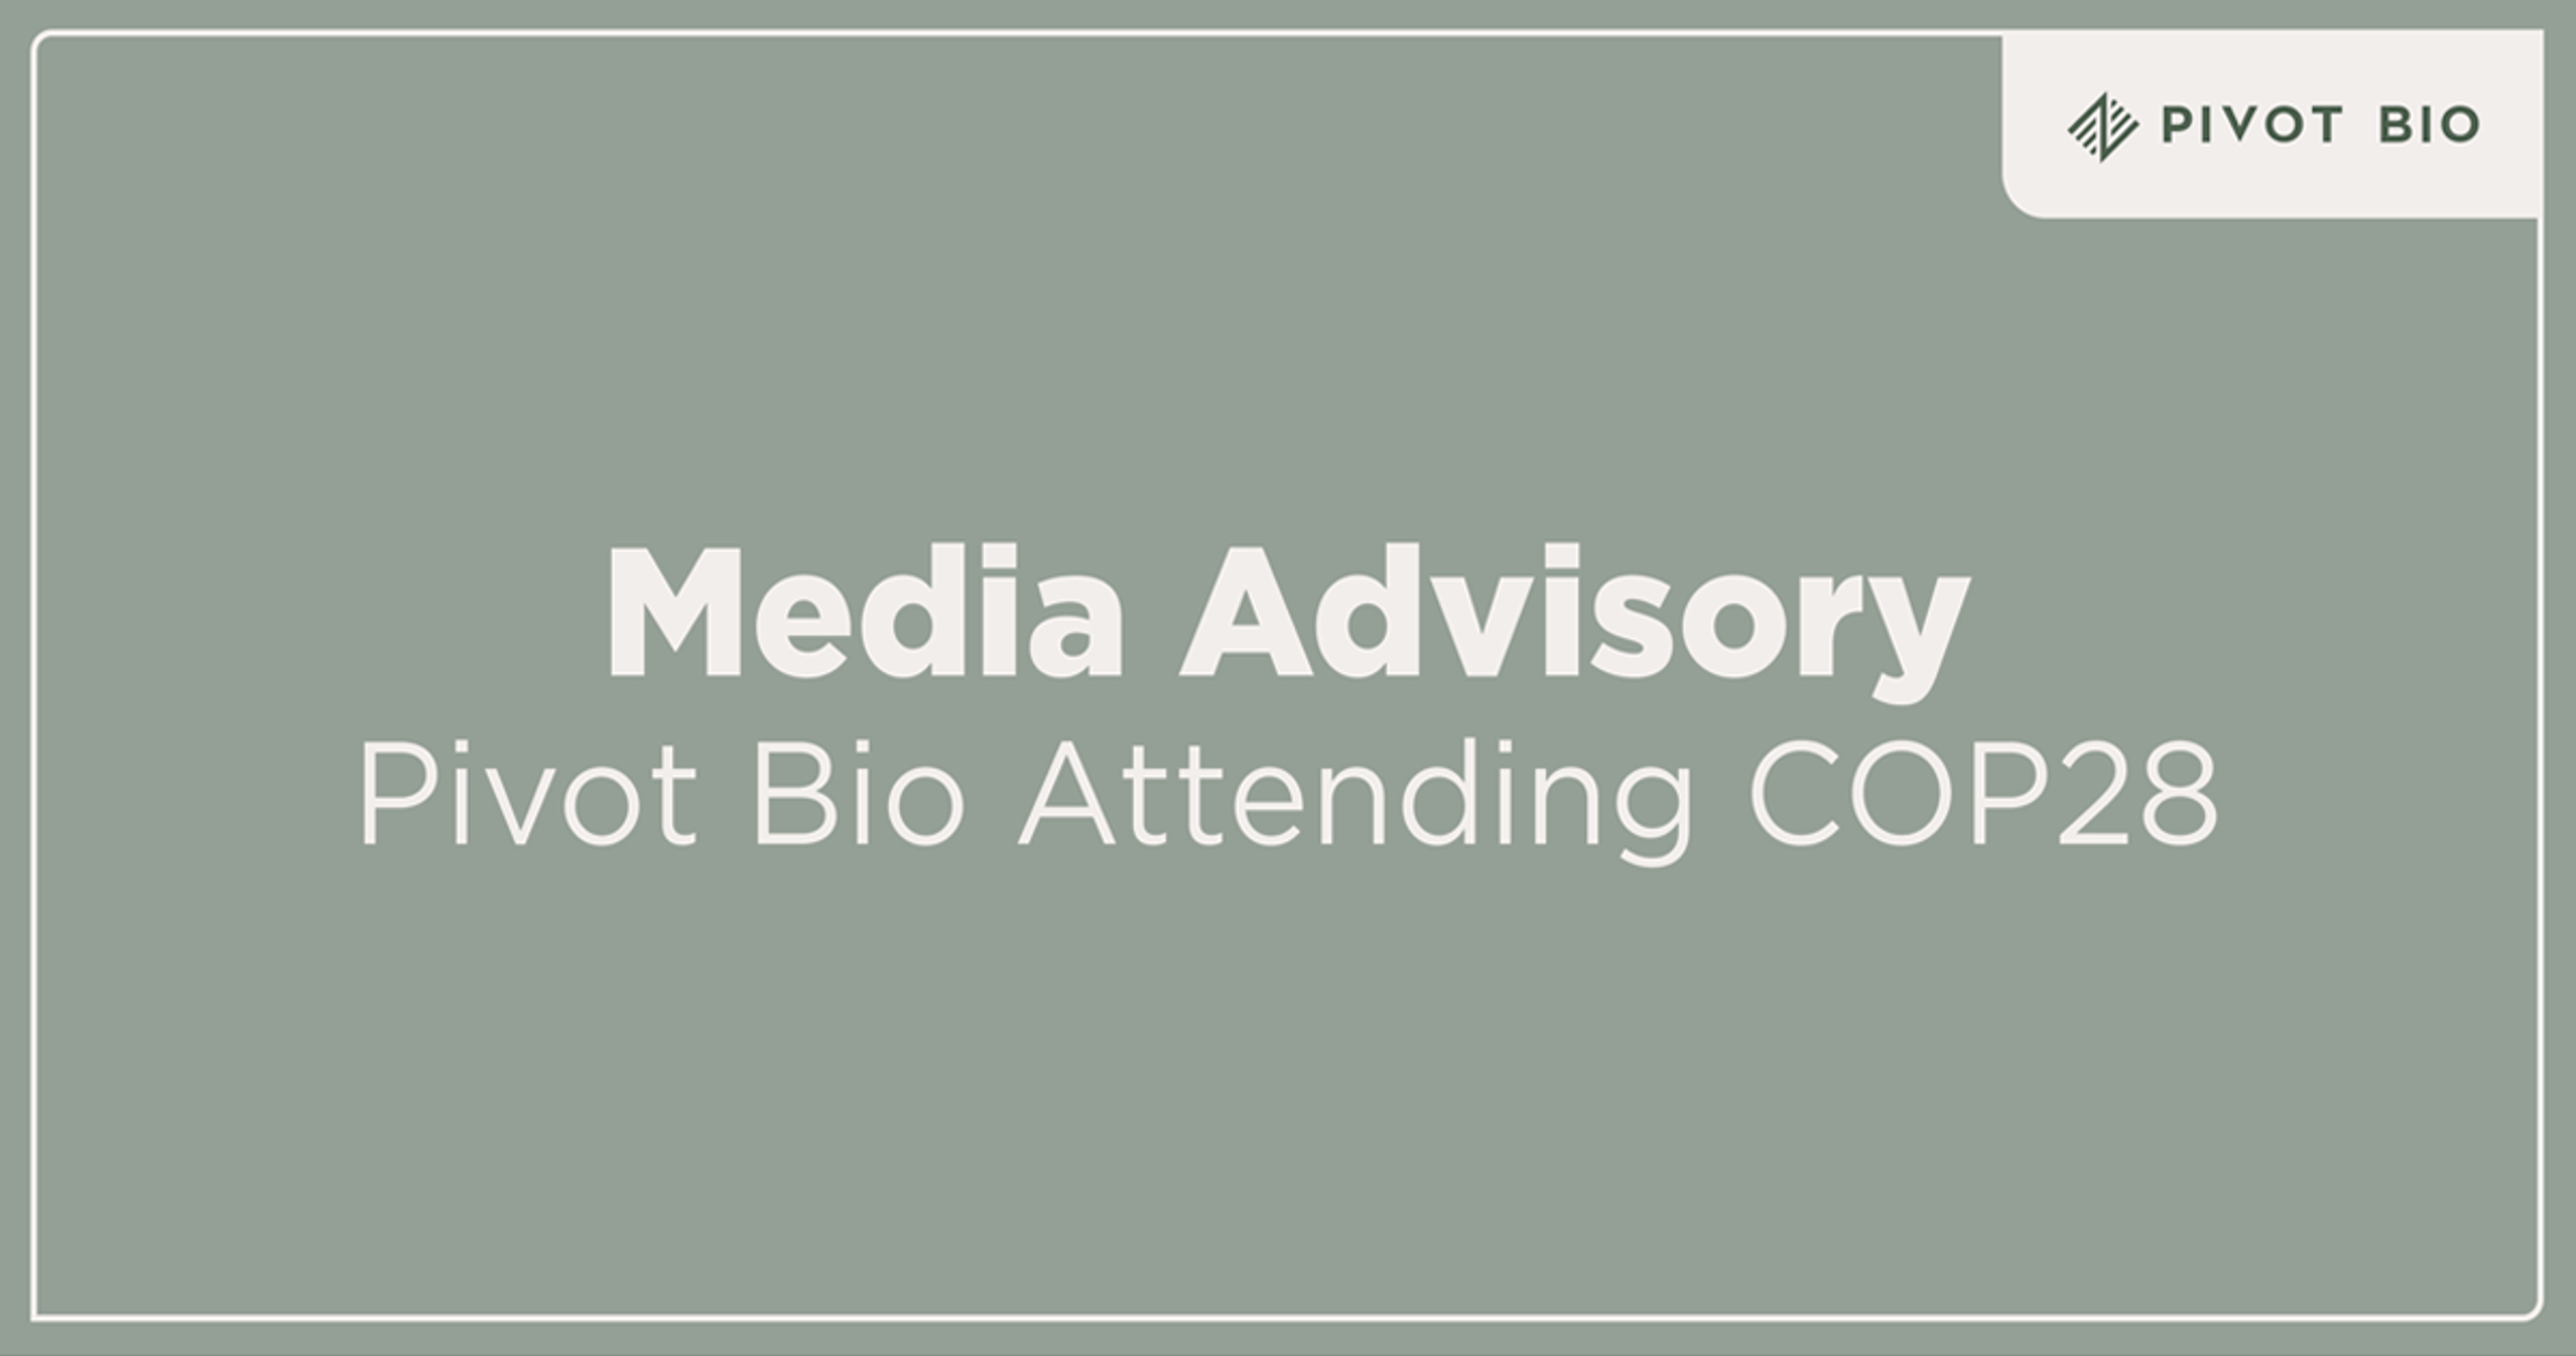 Pivot Bio Attending COP28 to Showcase Its Breakthrough Technology